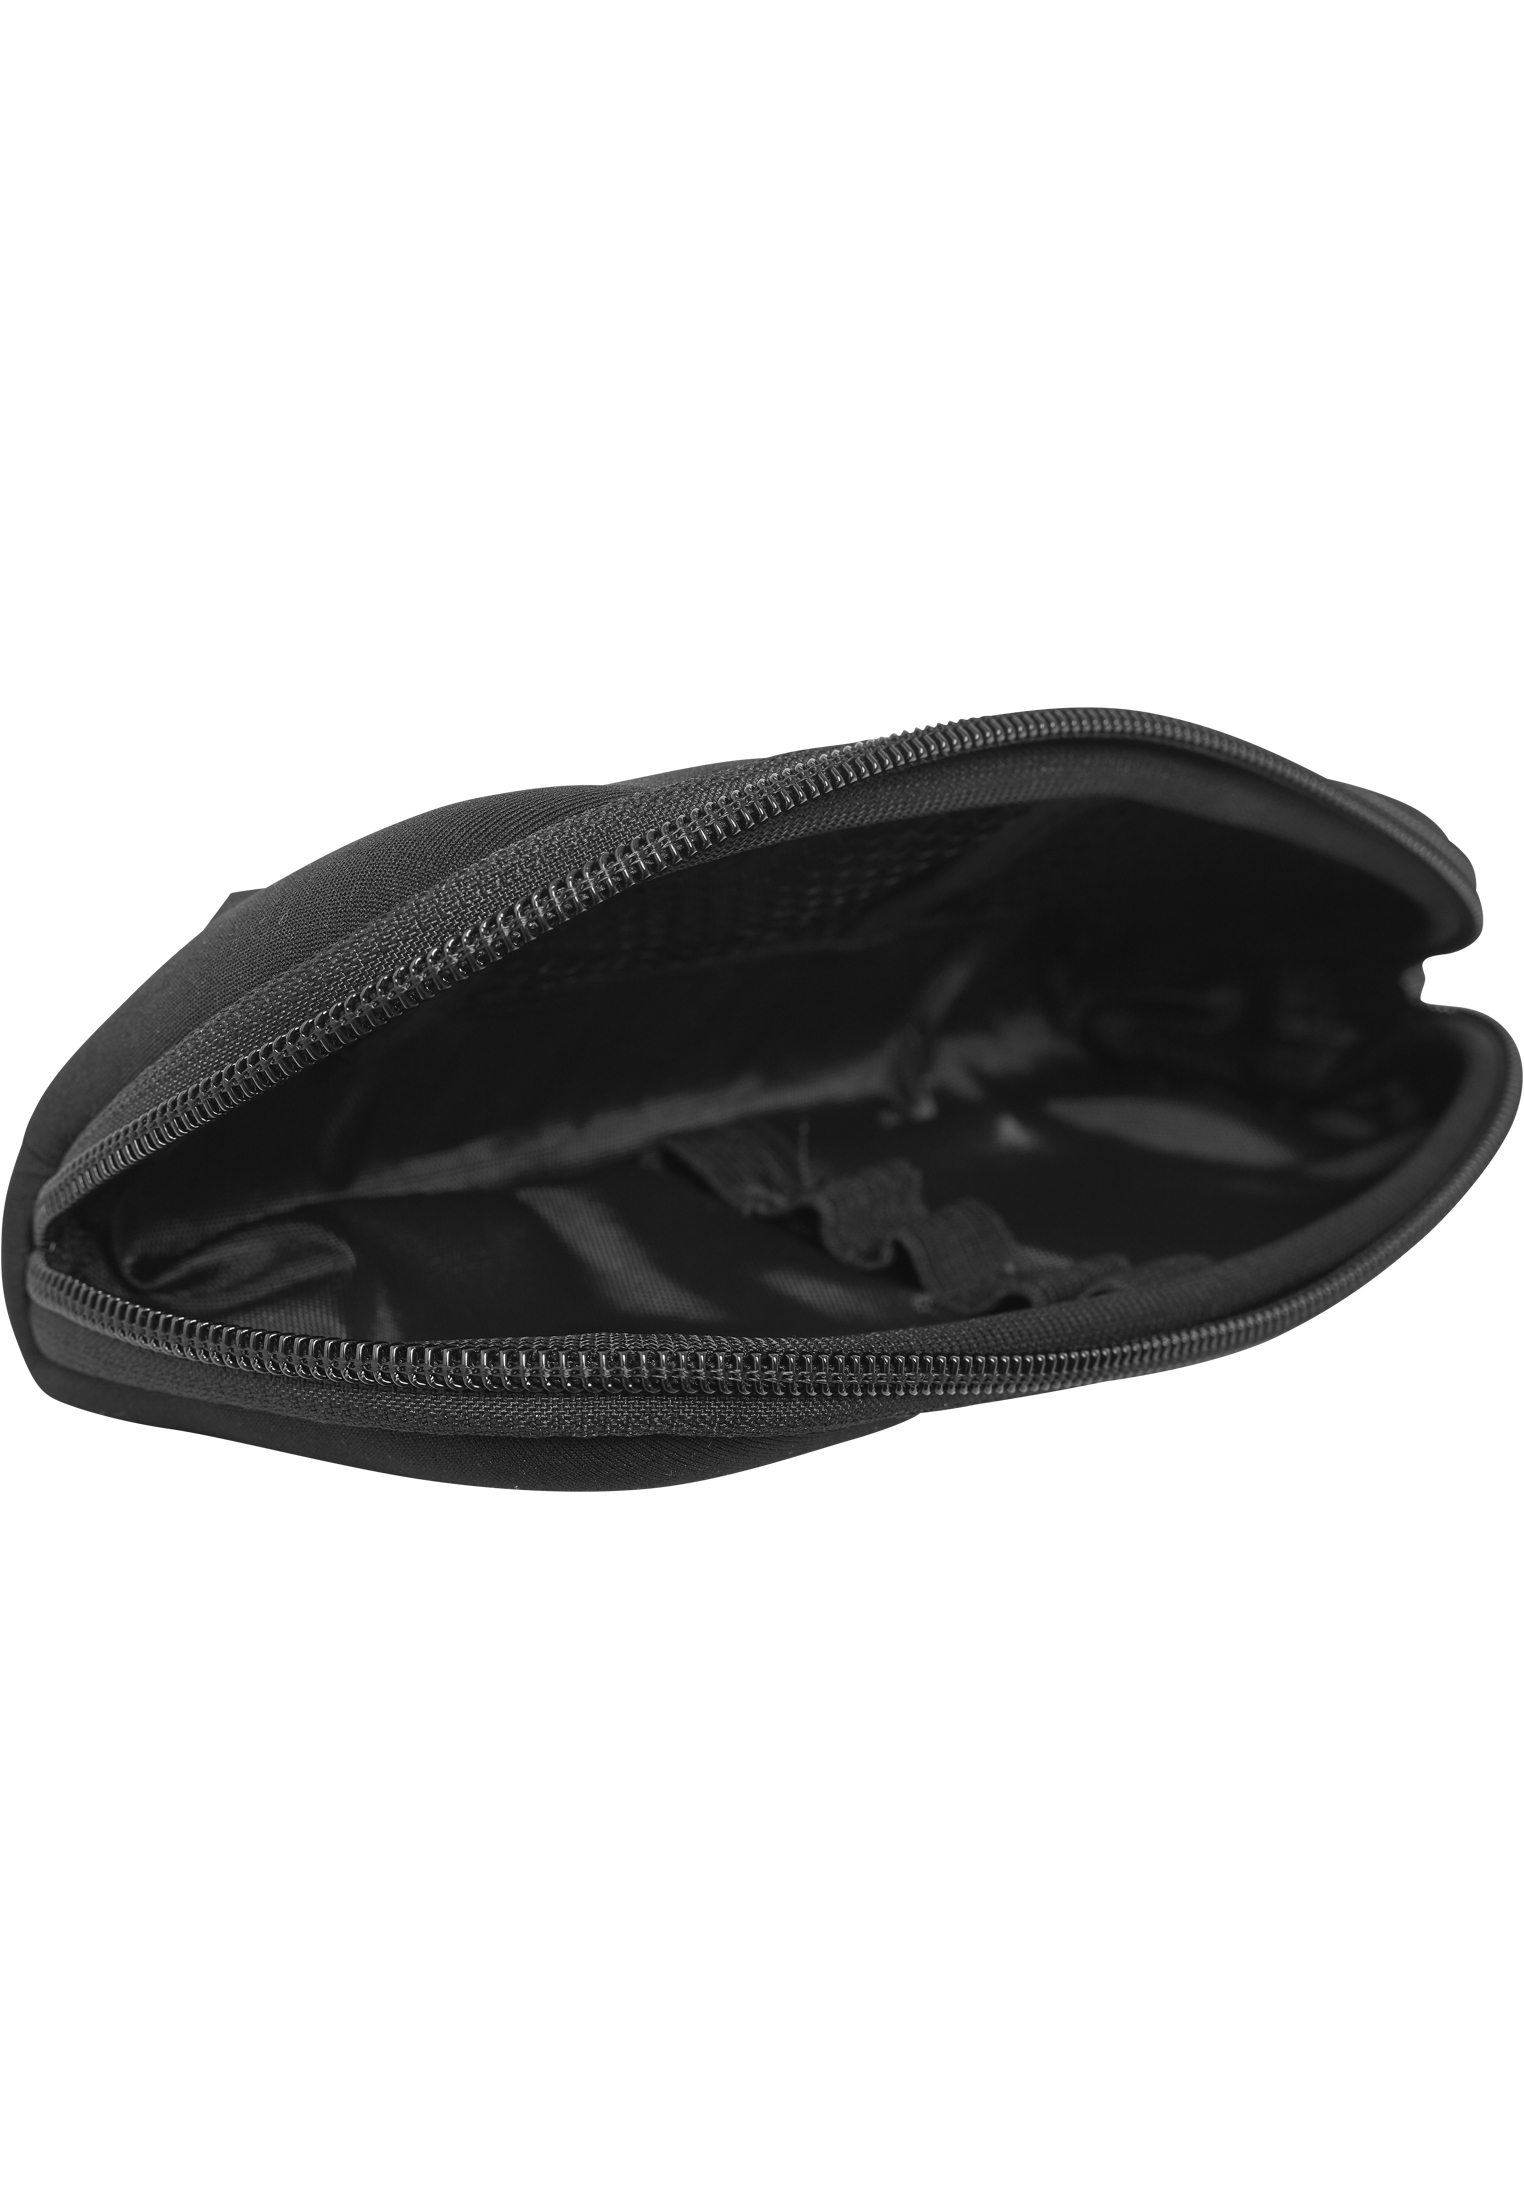 Taschen Pencil Pouch in Farbe black